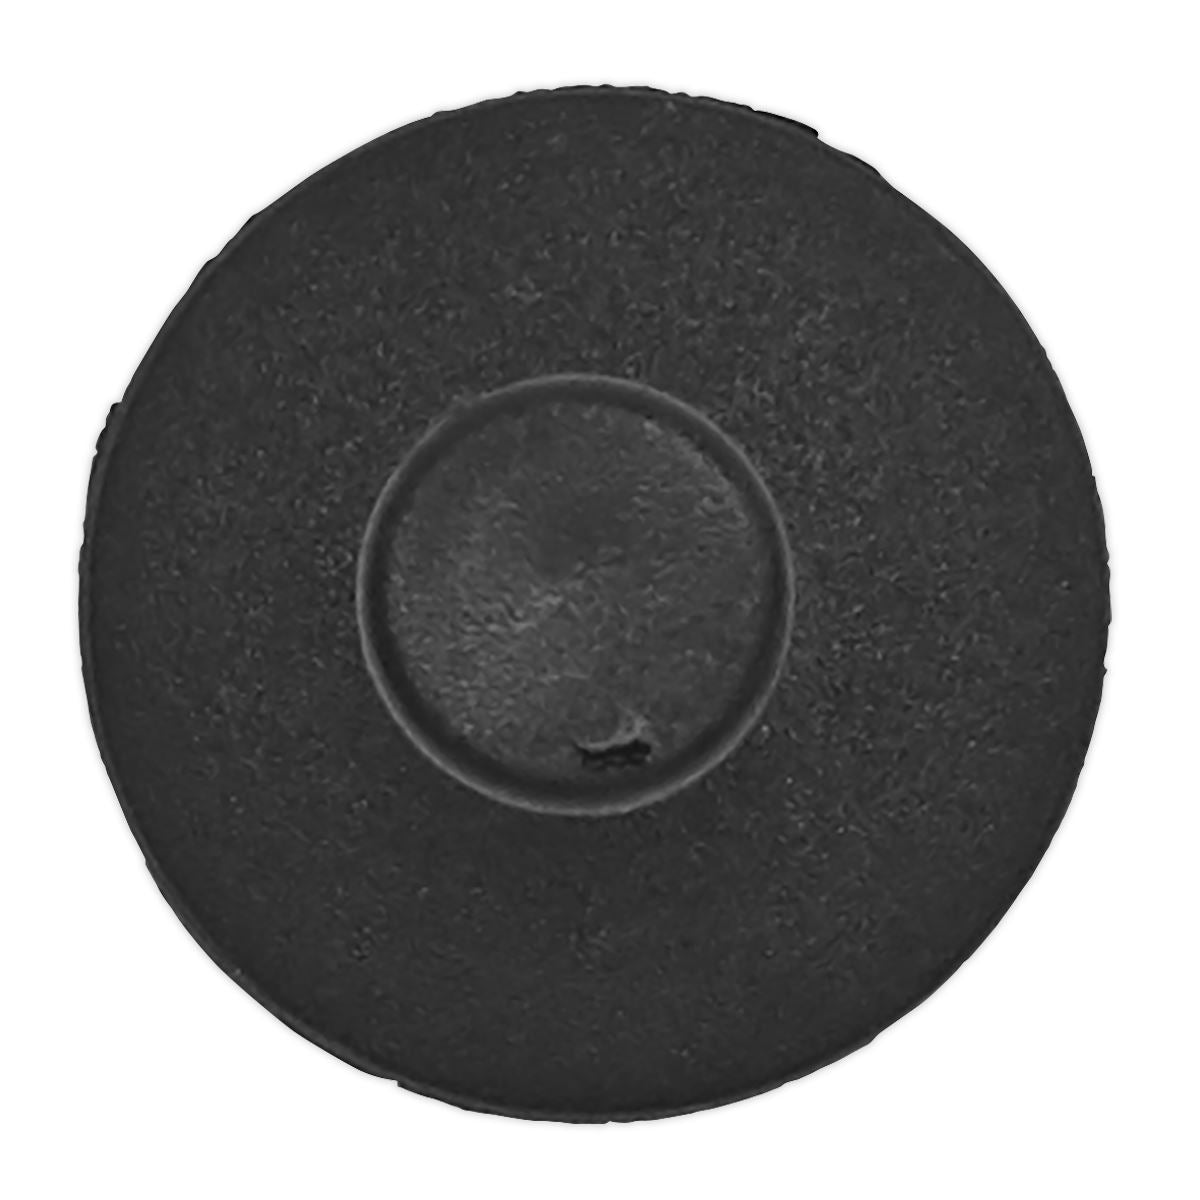 Sealey Push-In Bumper Fixing Rivet, Ø20mm x 24mm, Universal - Pack of 20